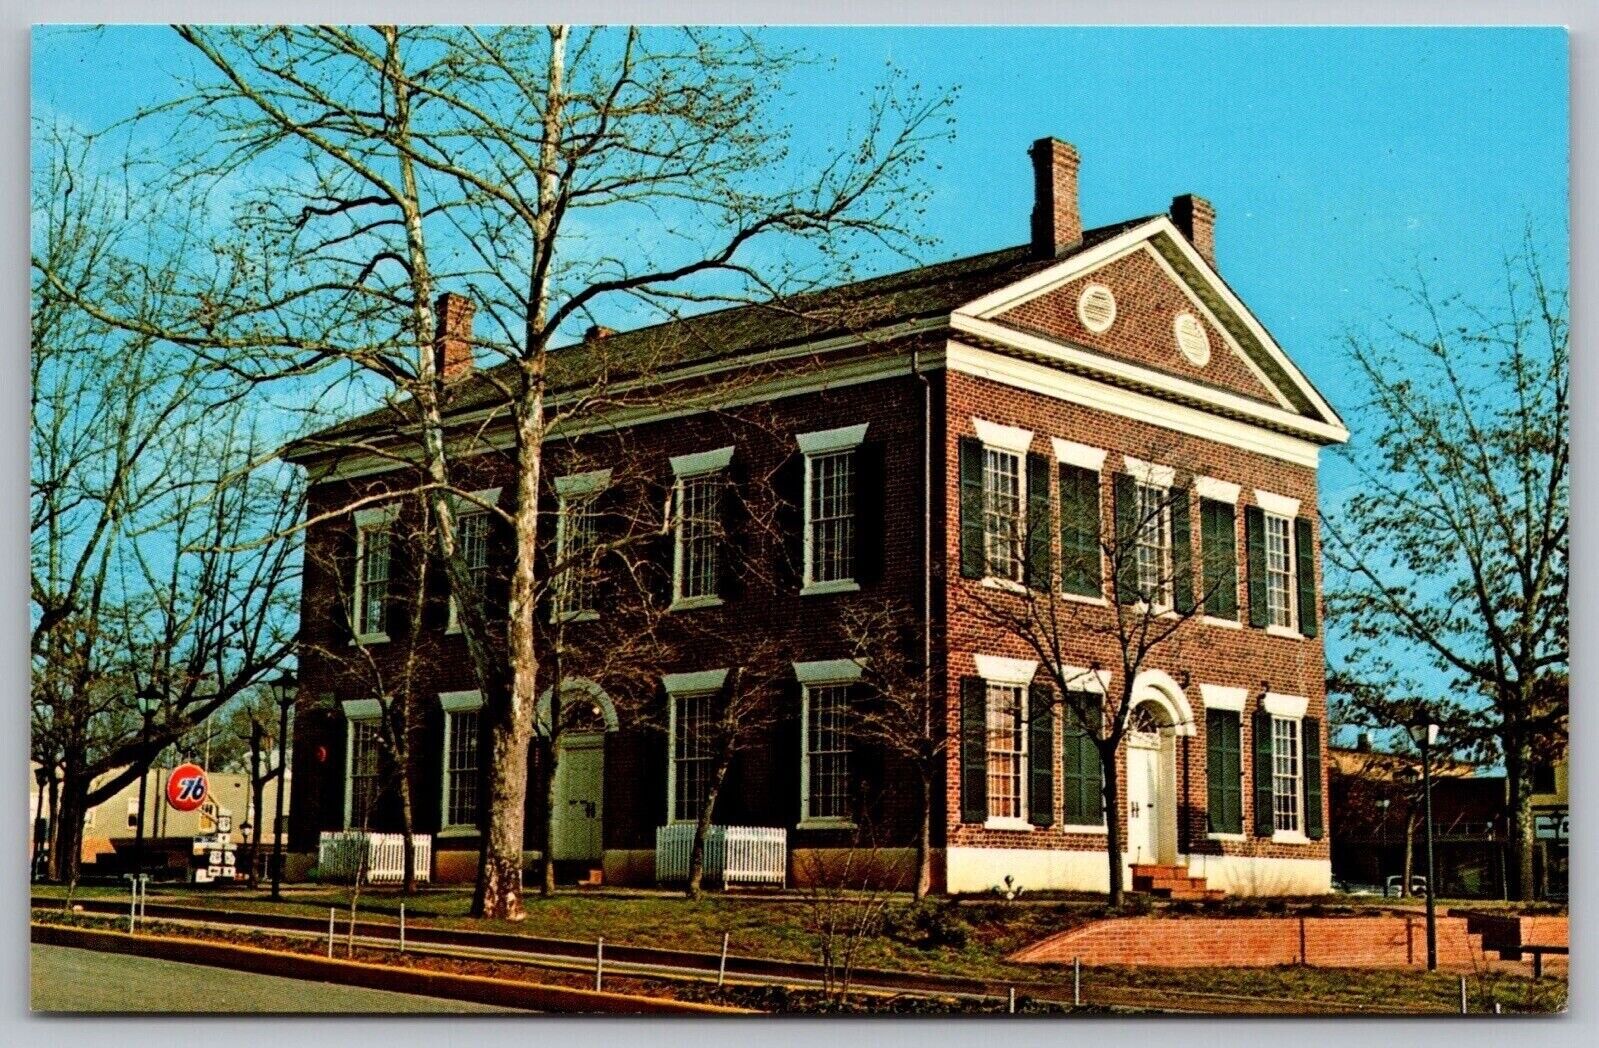 Gold Museum Dahlonega Georgia Historic Courthouse Lumpkin County VTG Postcard